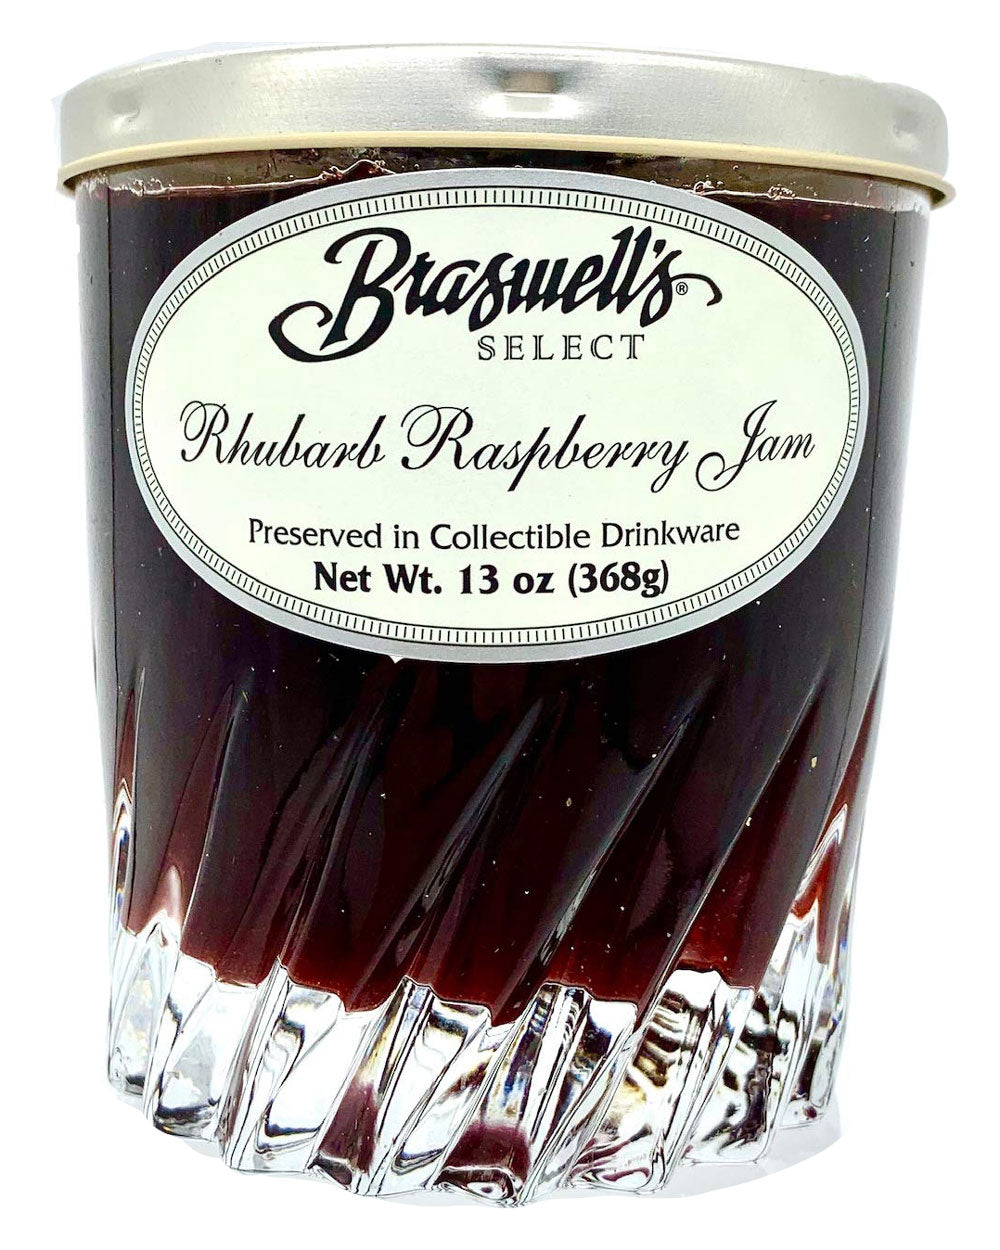 Rhubarb Raspberry Jam in Old Fashion Glass